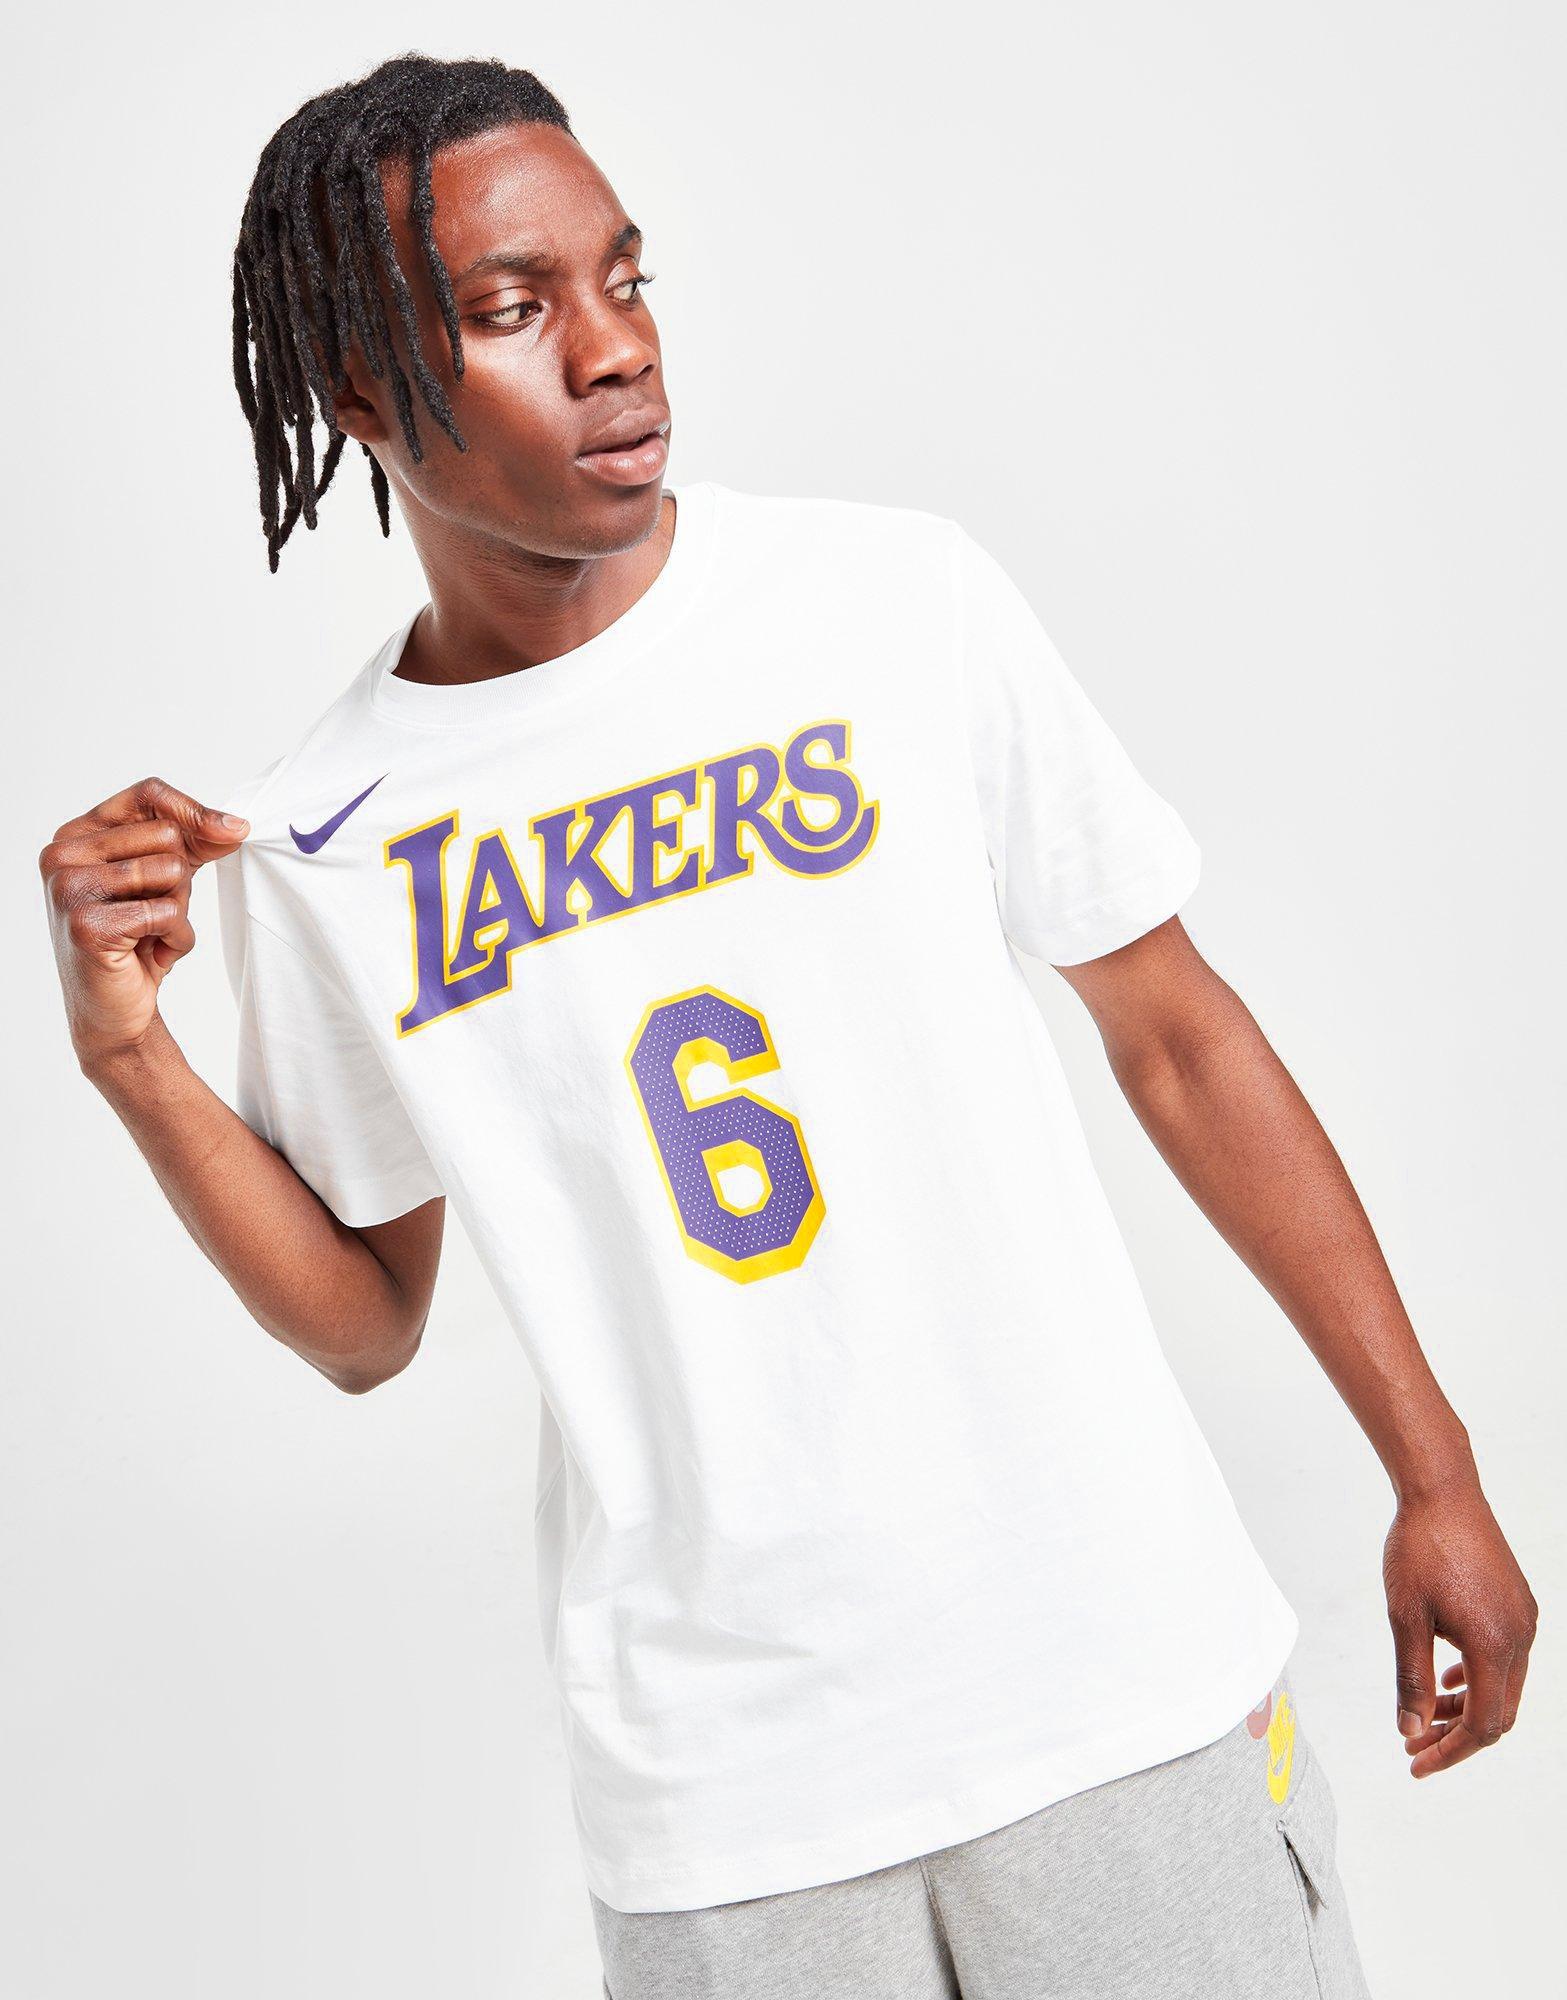 Nike NBA Los Angeles Lakers James #6 T-Shirt